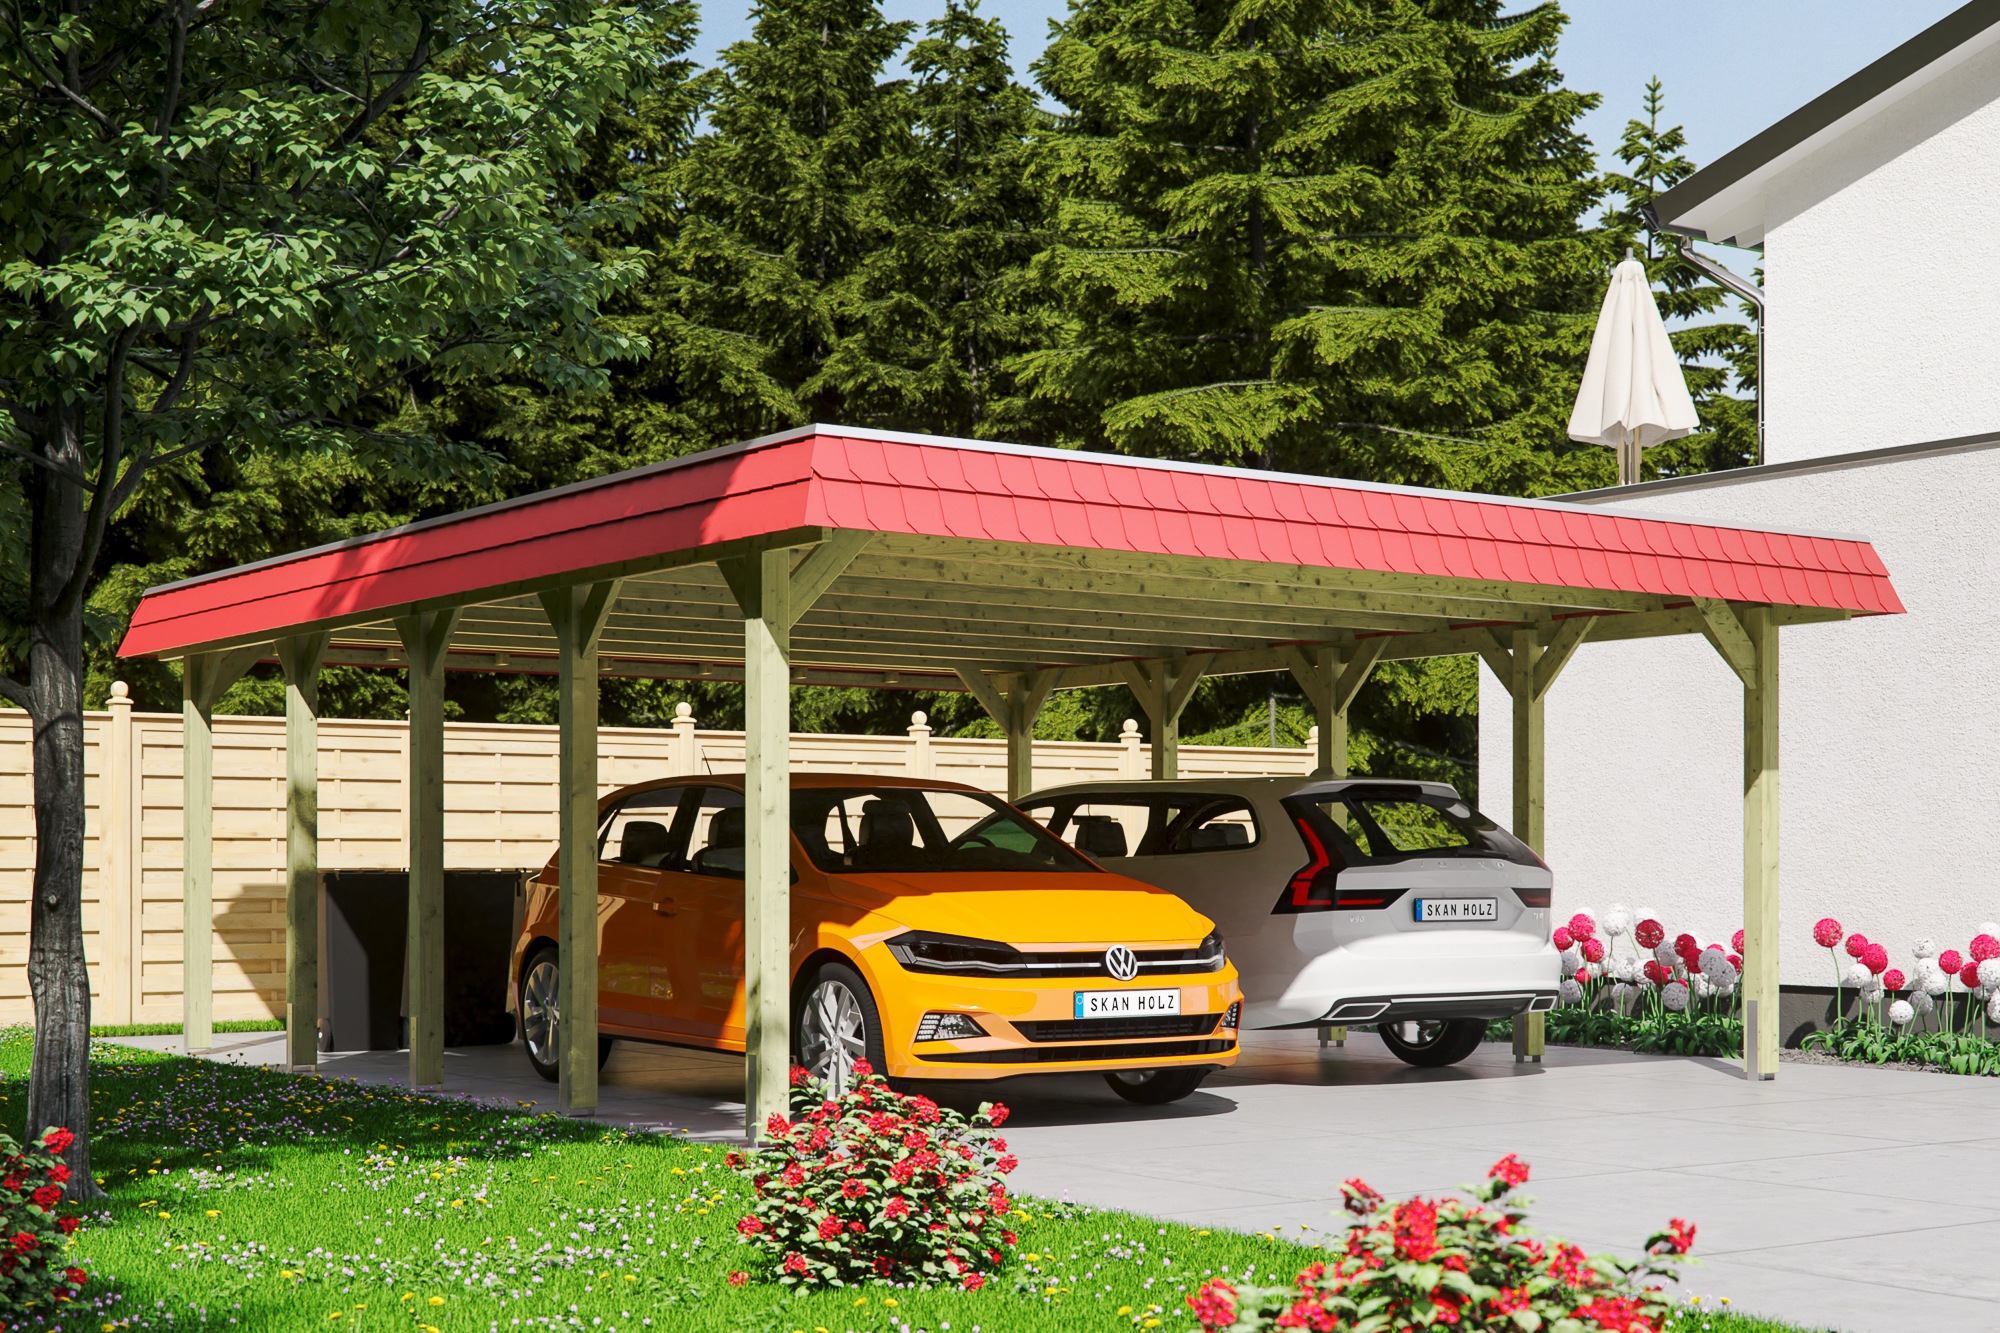 Skanholz Doppelcarport »Spreewald«, Nadelholz, 530 cm, Grün, mit EPDM-Dach, rote Blende